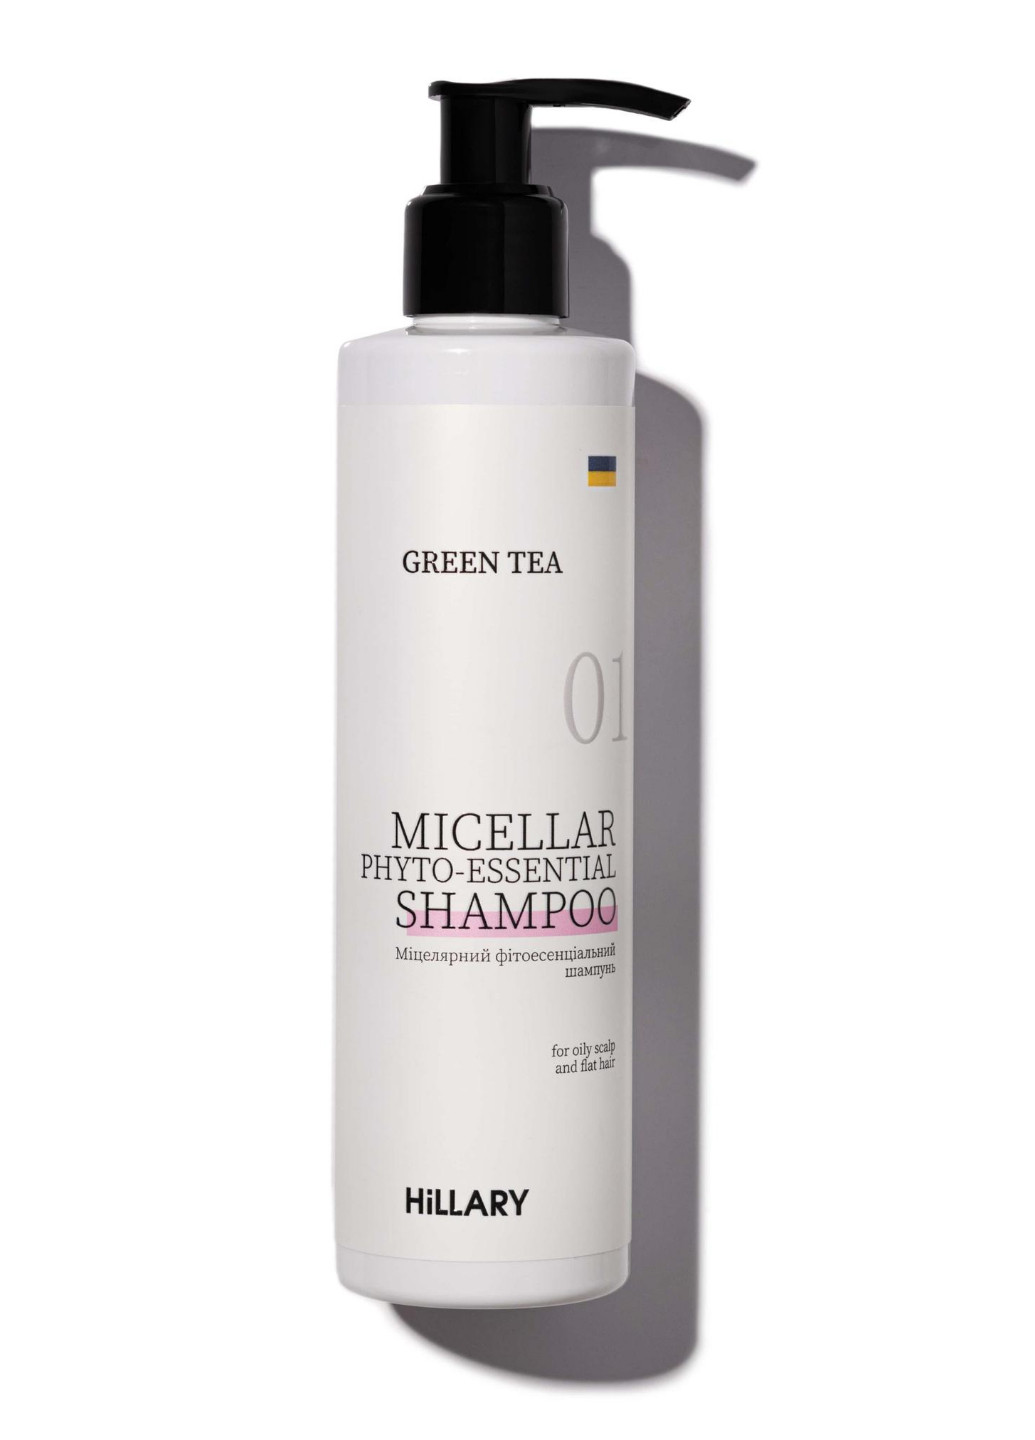 Мицеллярный фитоэссенциальный шампунь Green Tea Green Tea Micellar Phyto-essential Shampoo, 250 мл Hillary (254032633)